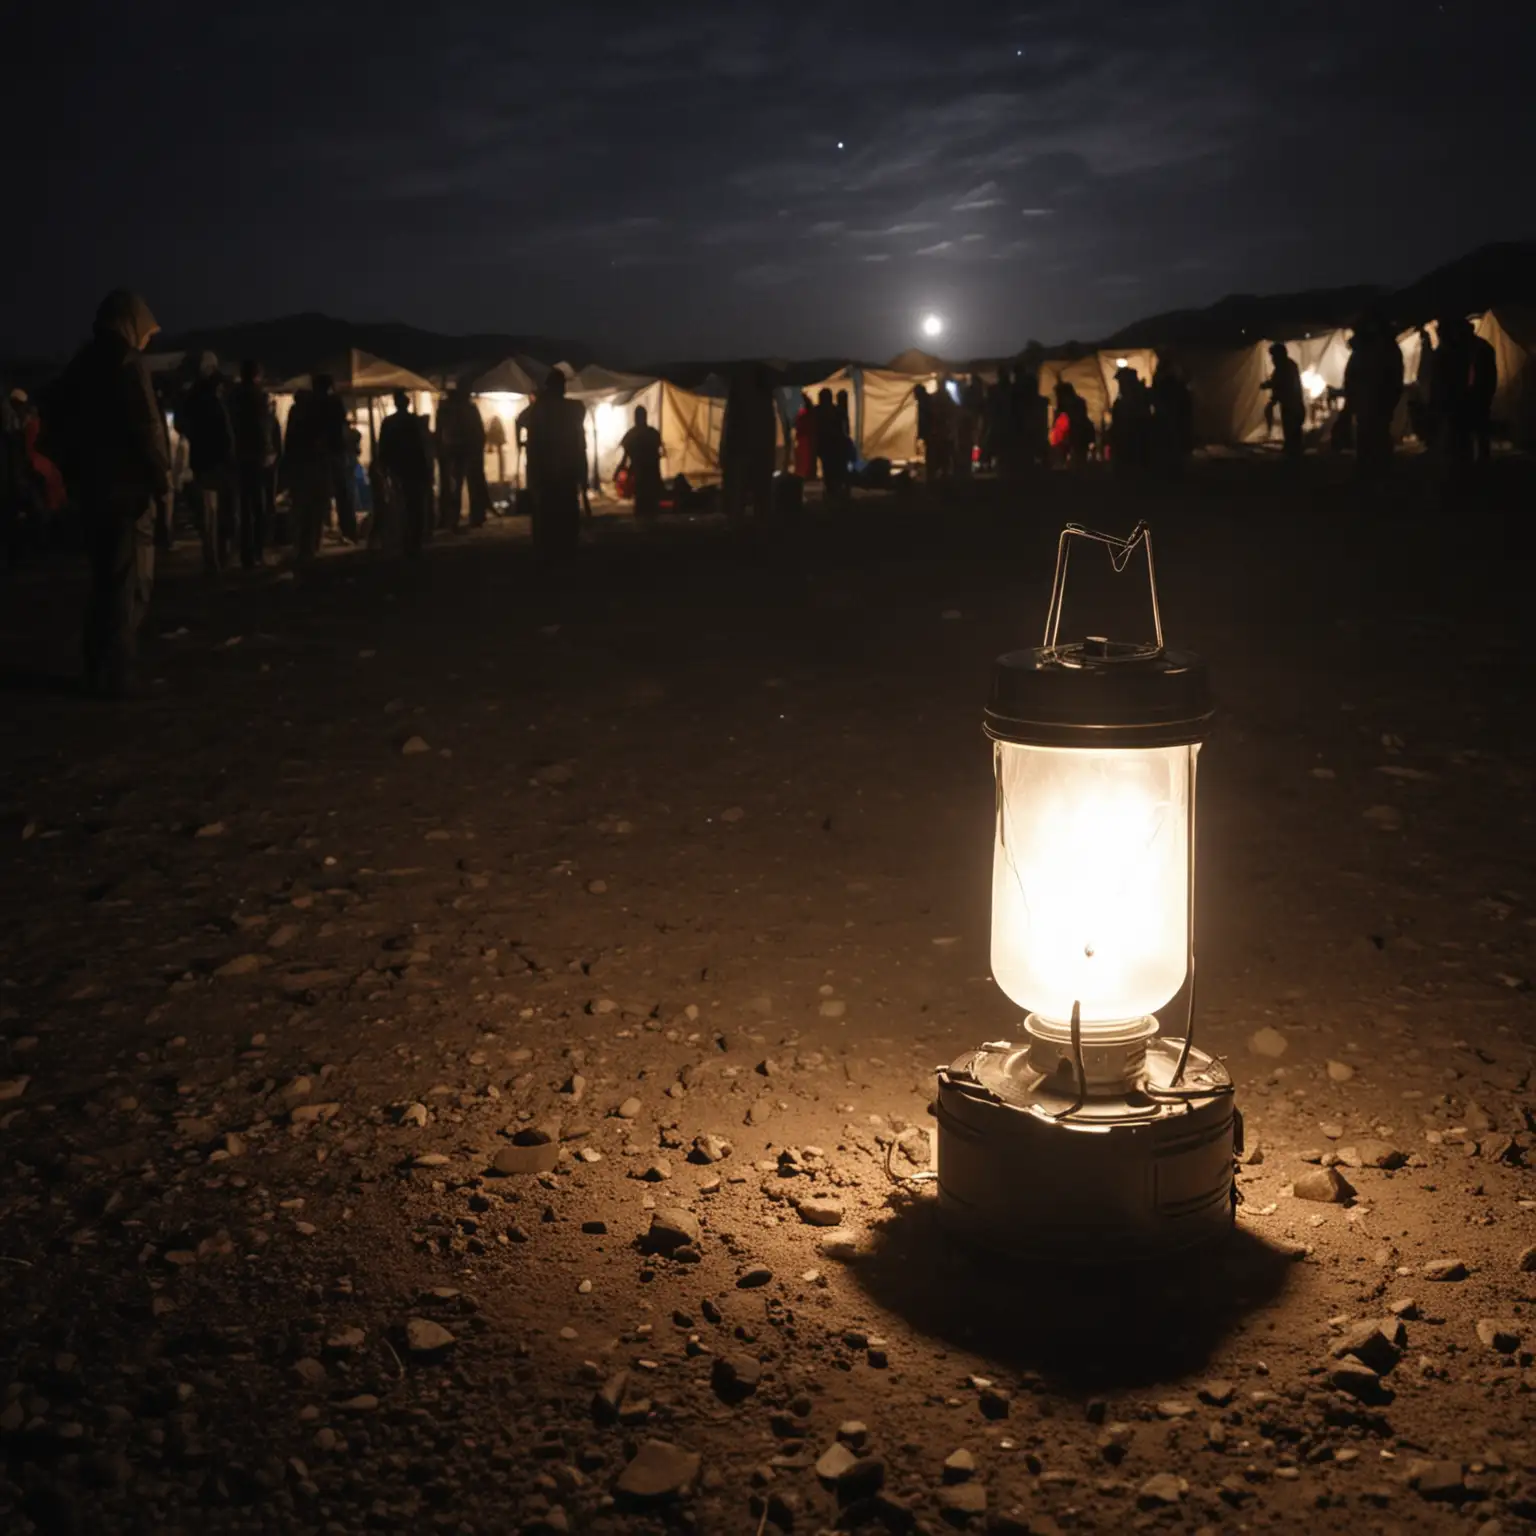 Portable Light Lamp Illuminates Refugees Camp in Darkness